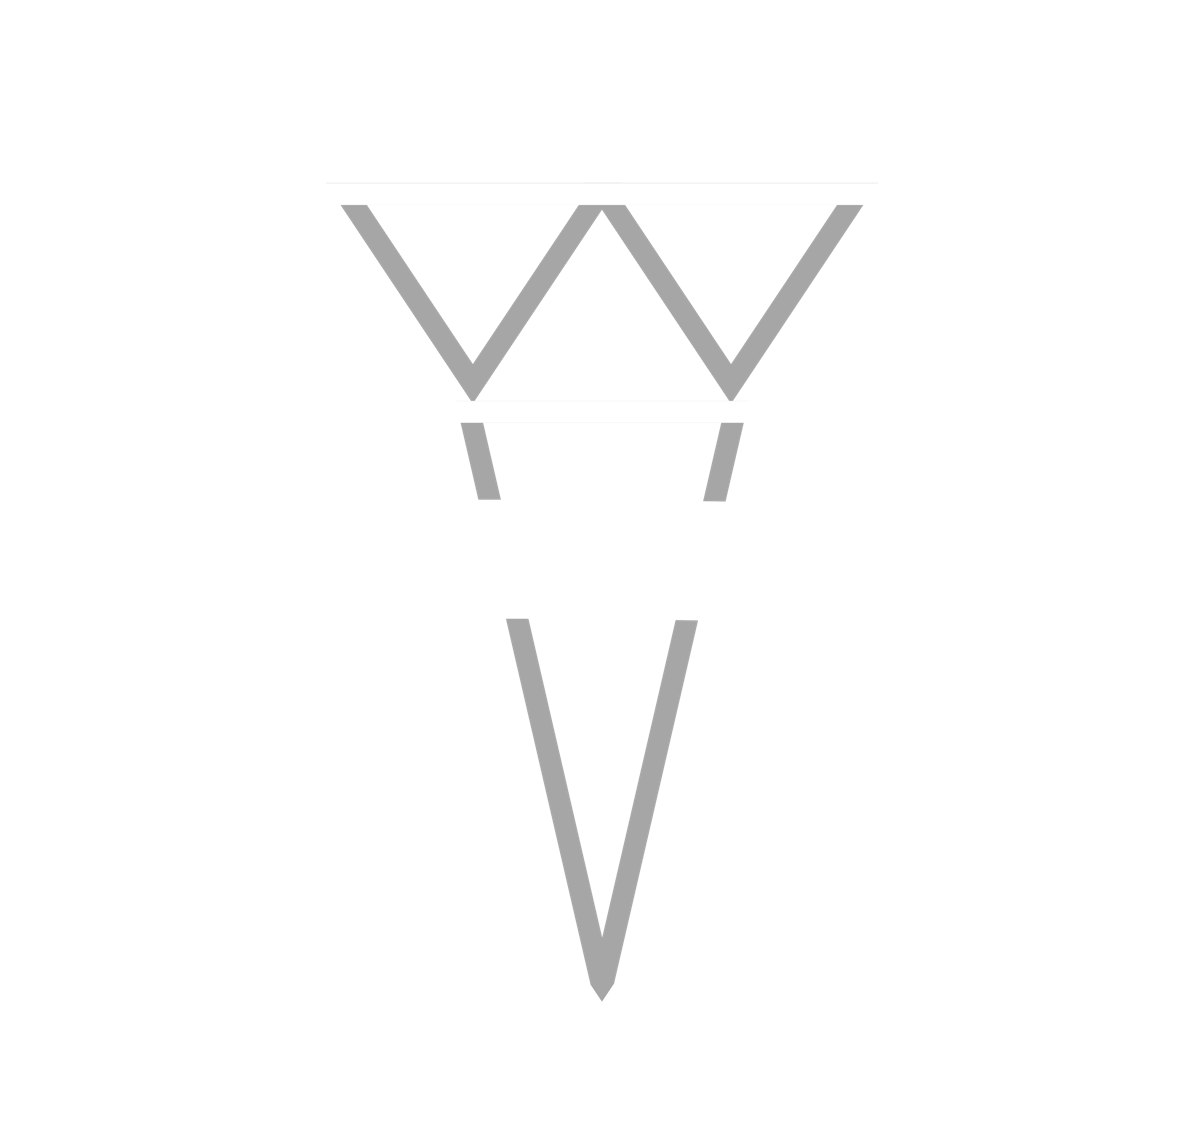 Veni vidi vici and olympics ring tattooed on Vincent